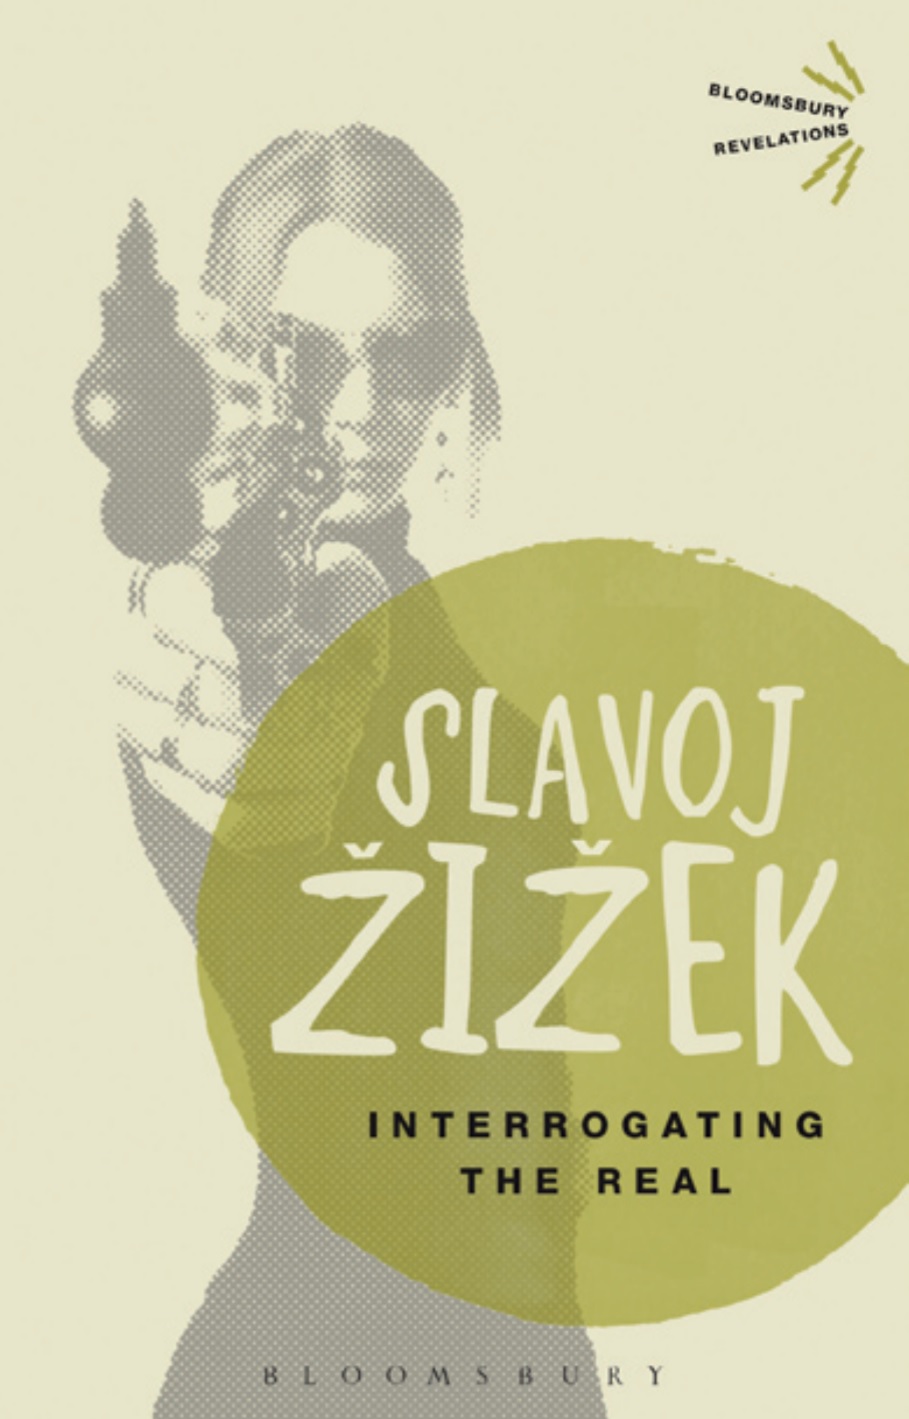 Slavoj-zizek-interrogating-the-real-theoryleaks.jpg